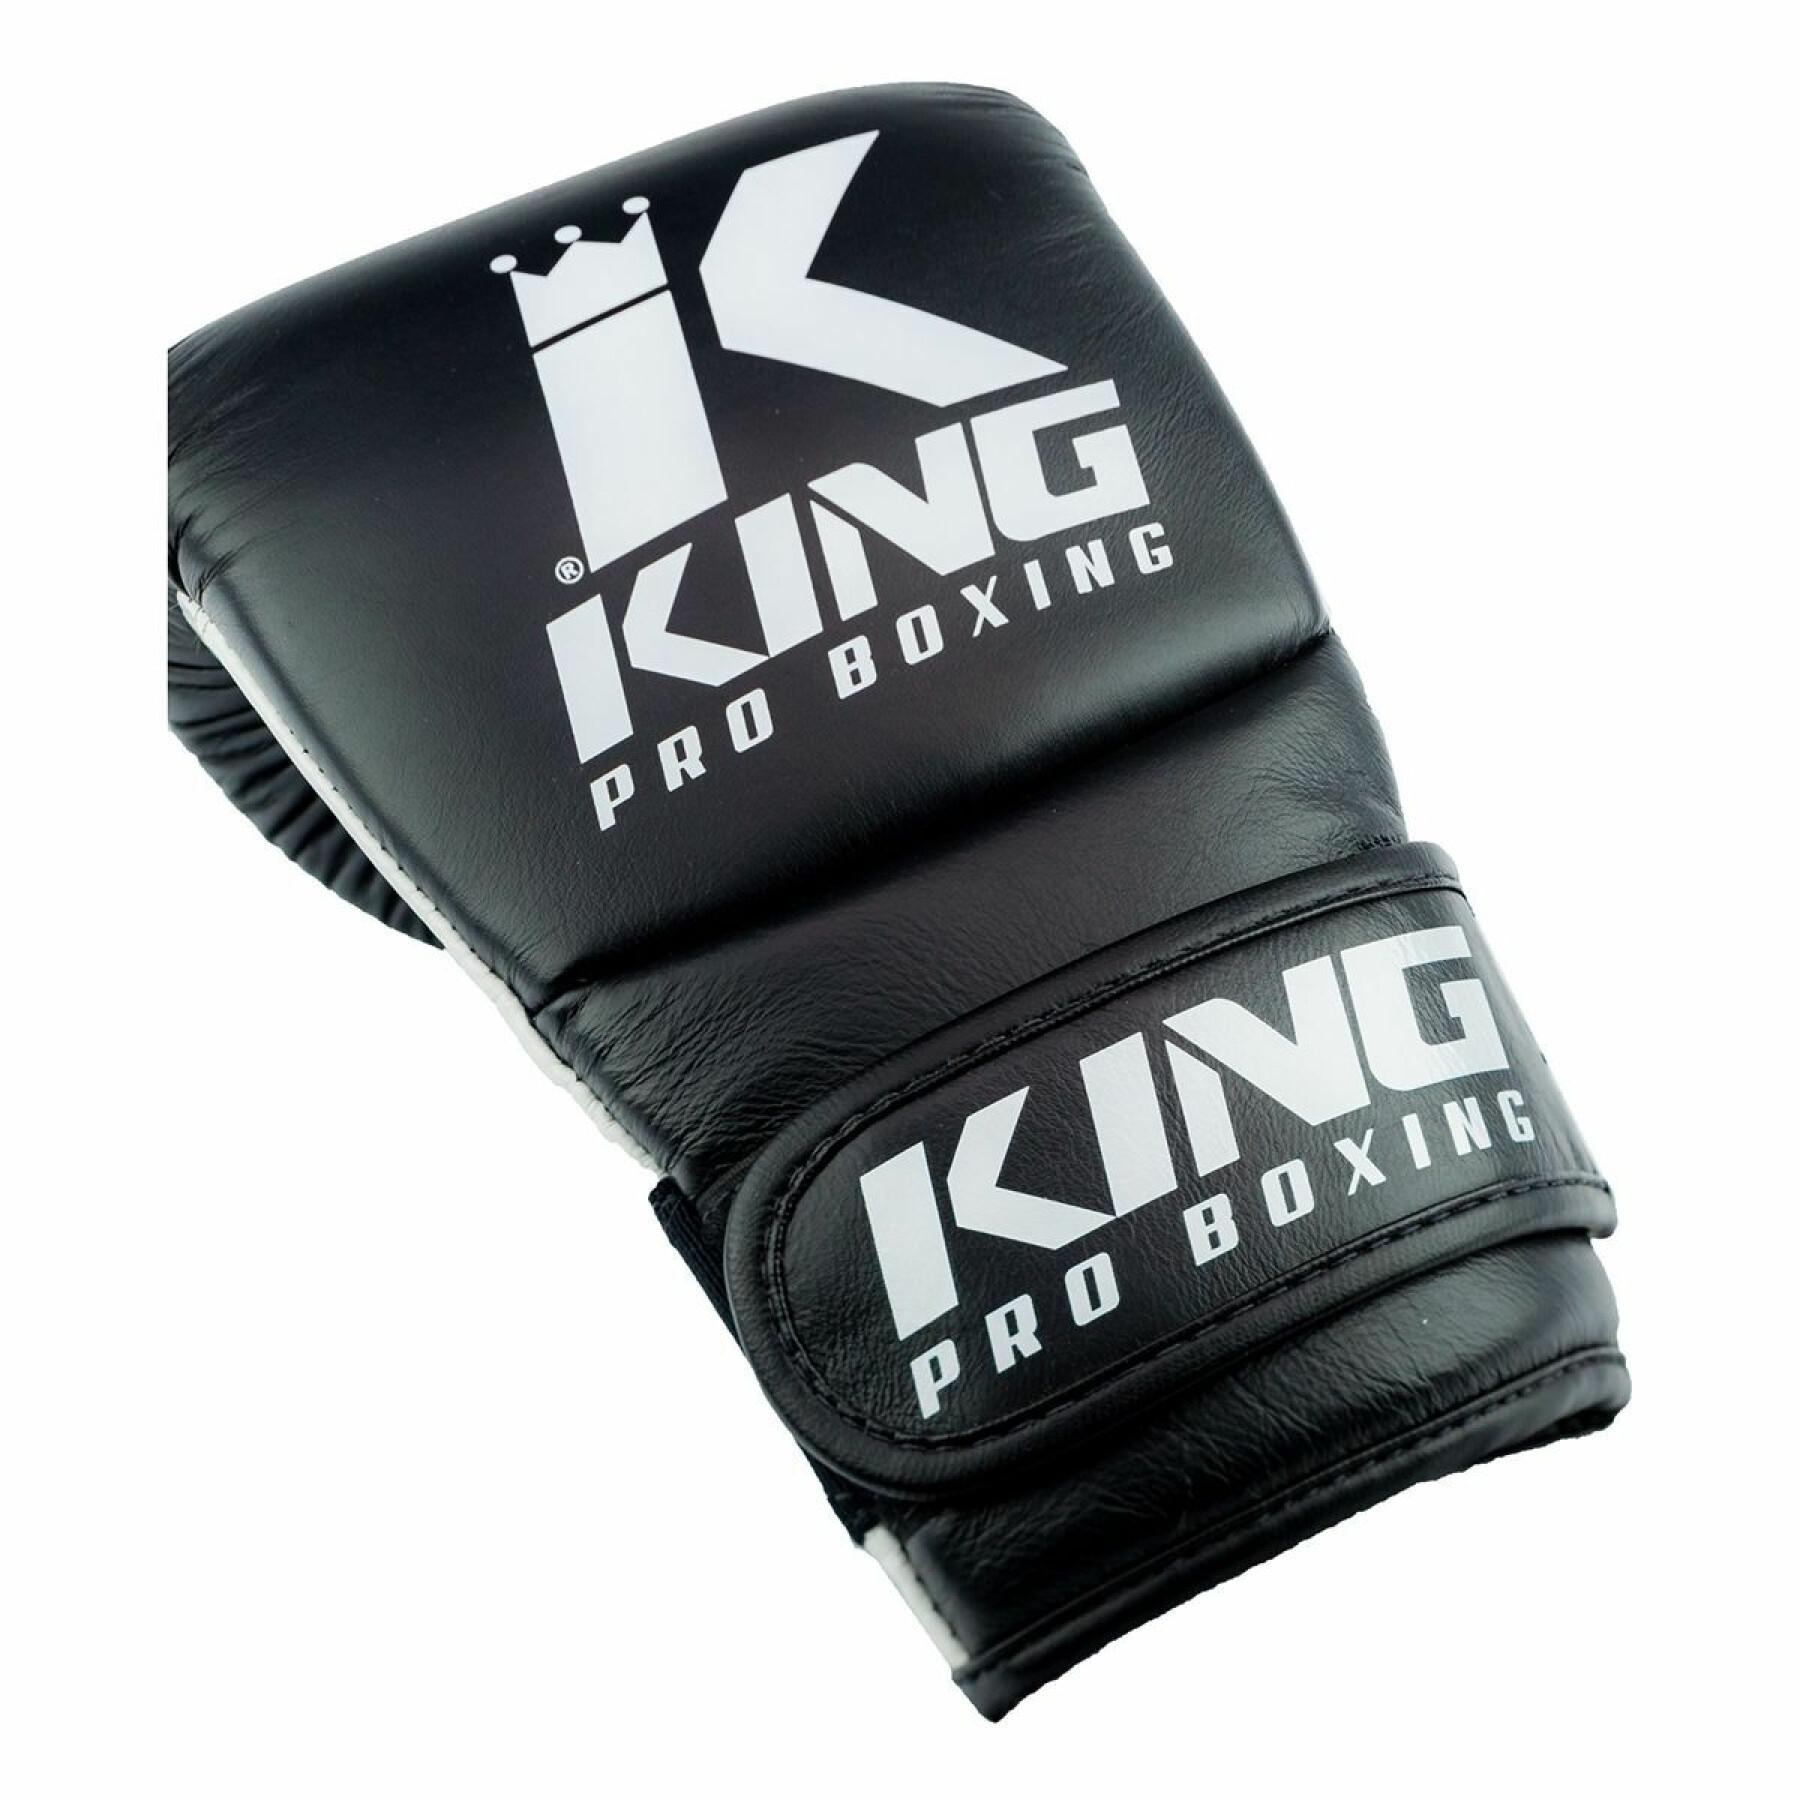 Rękawice treningowe King Pro Boxing Kpb/Bm